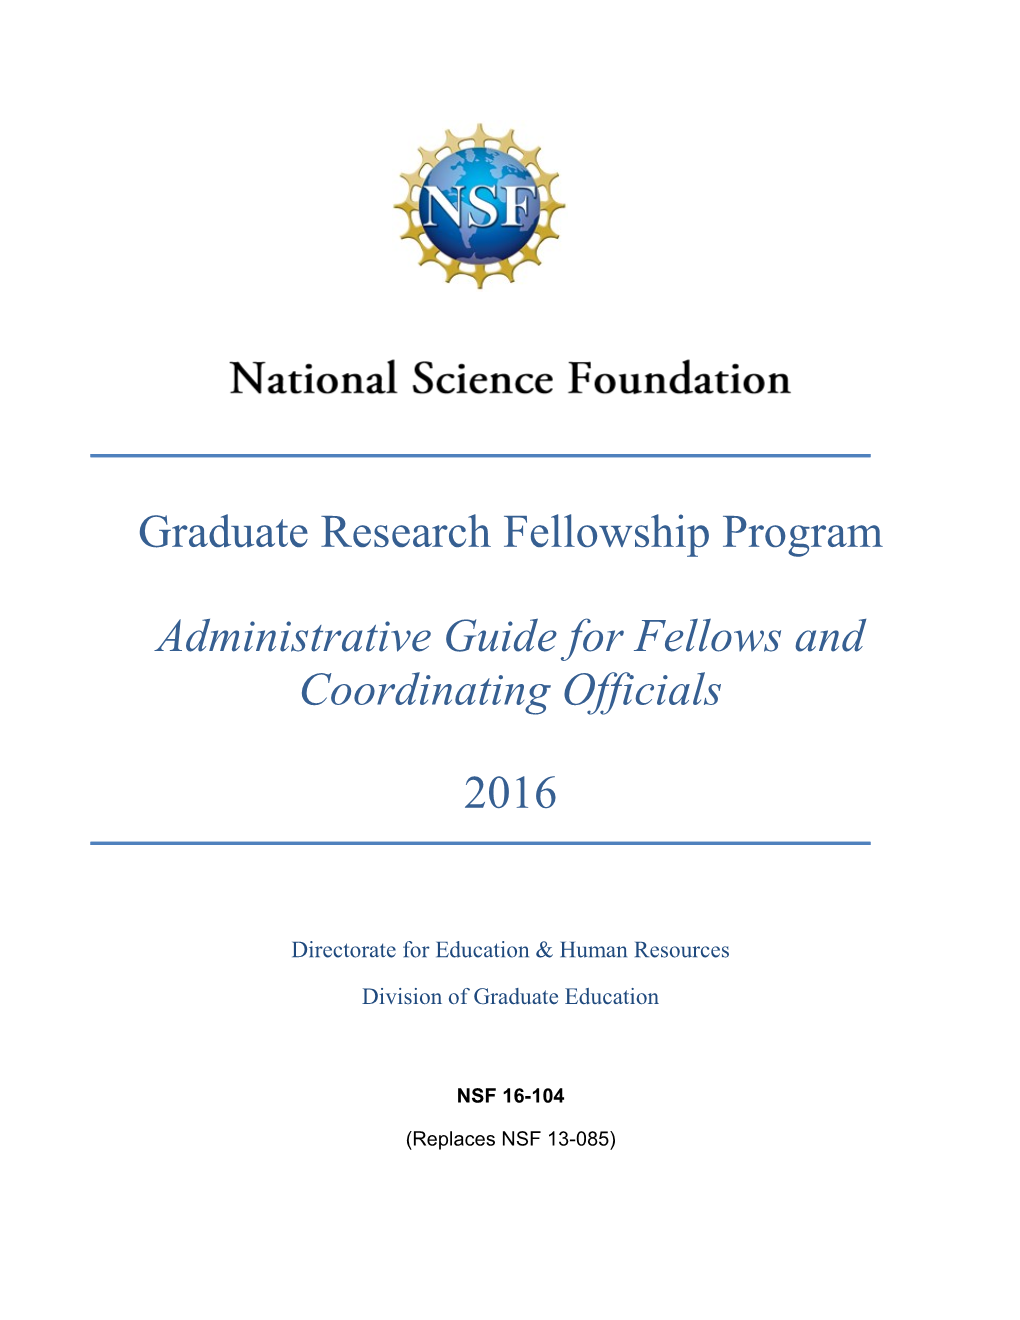 NSF Graduate Research Fellowship (GRFP) Program